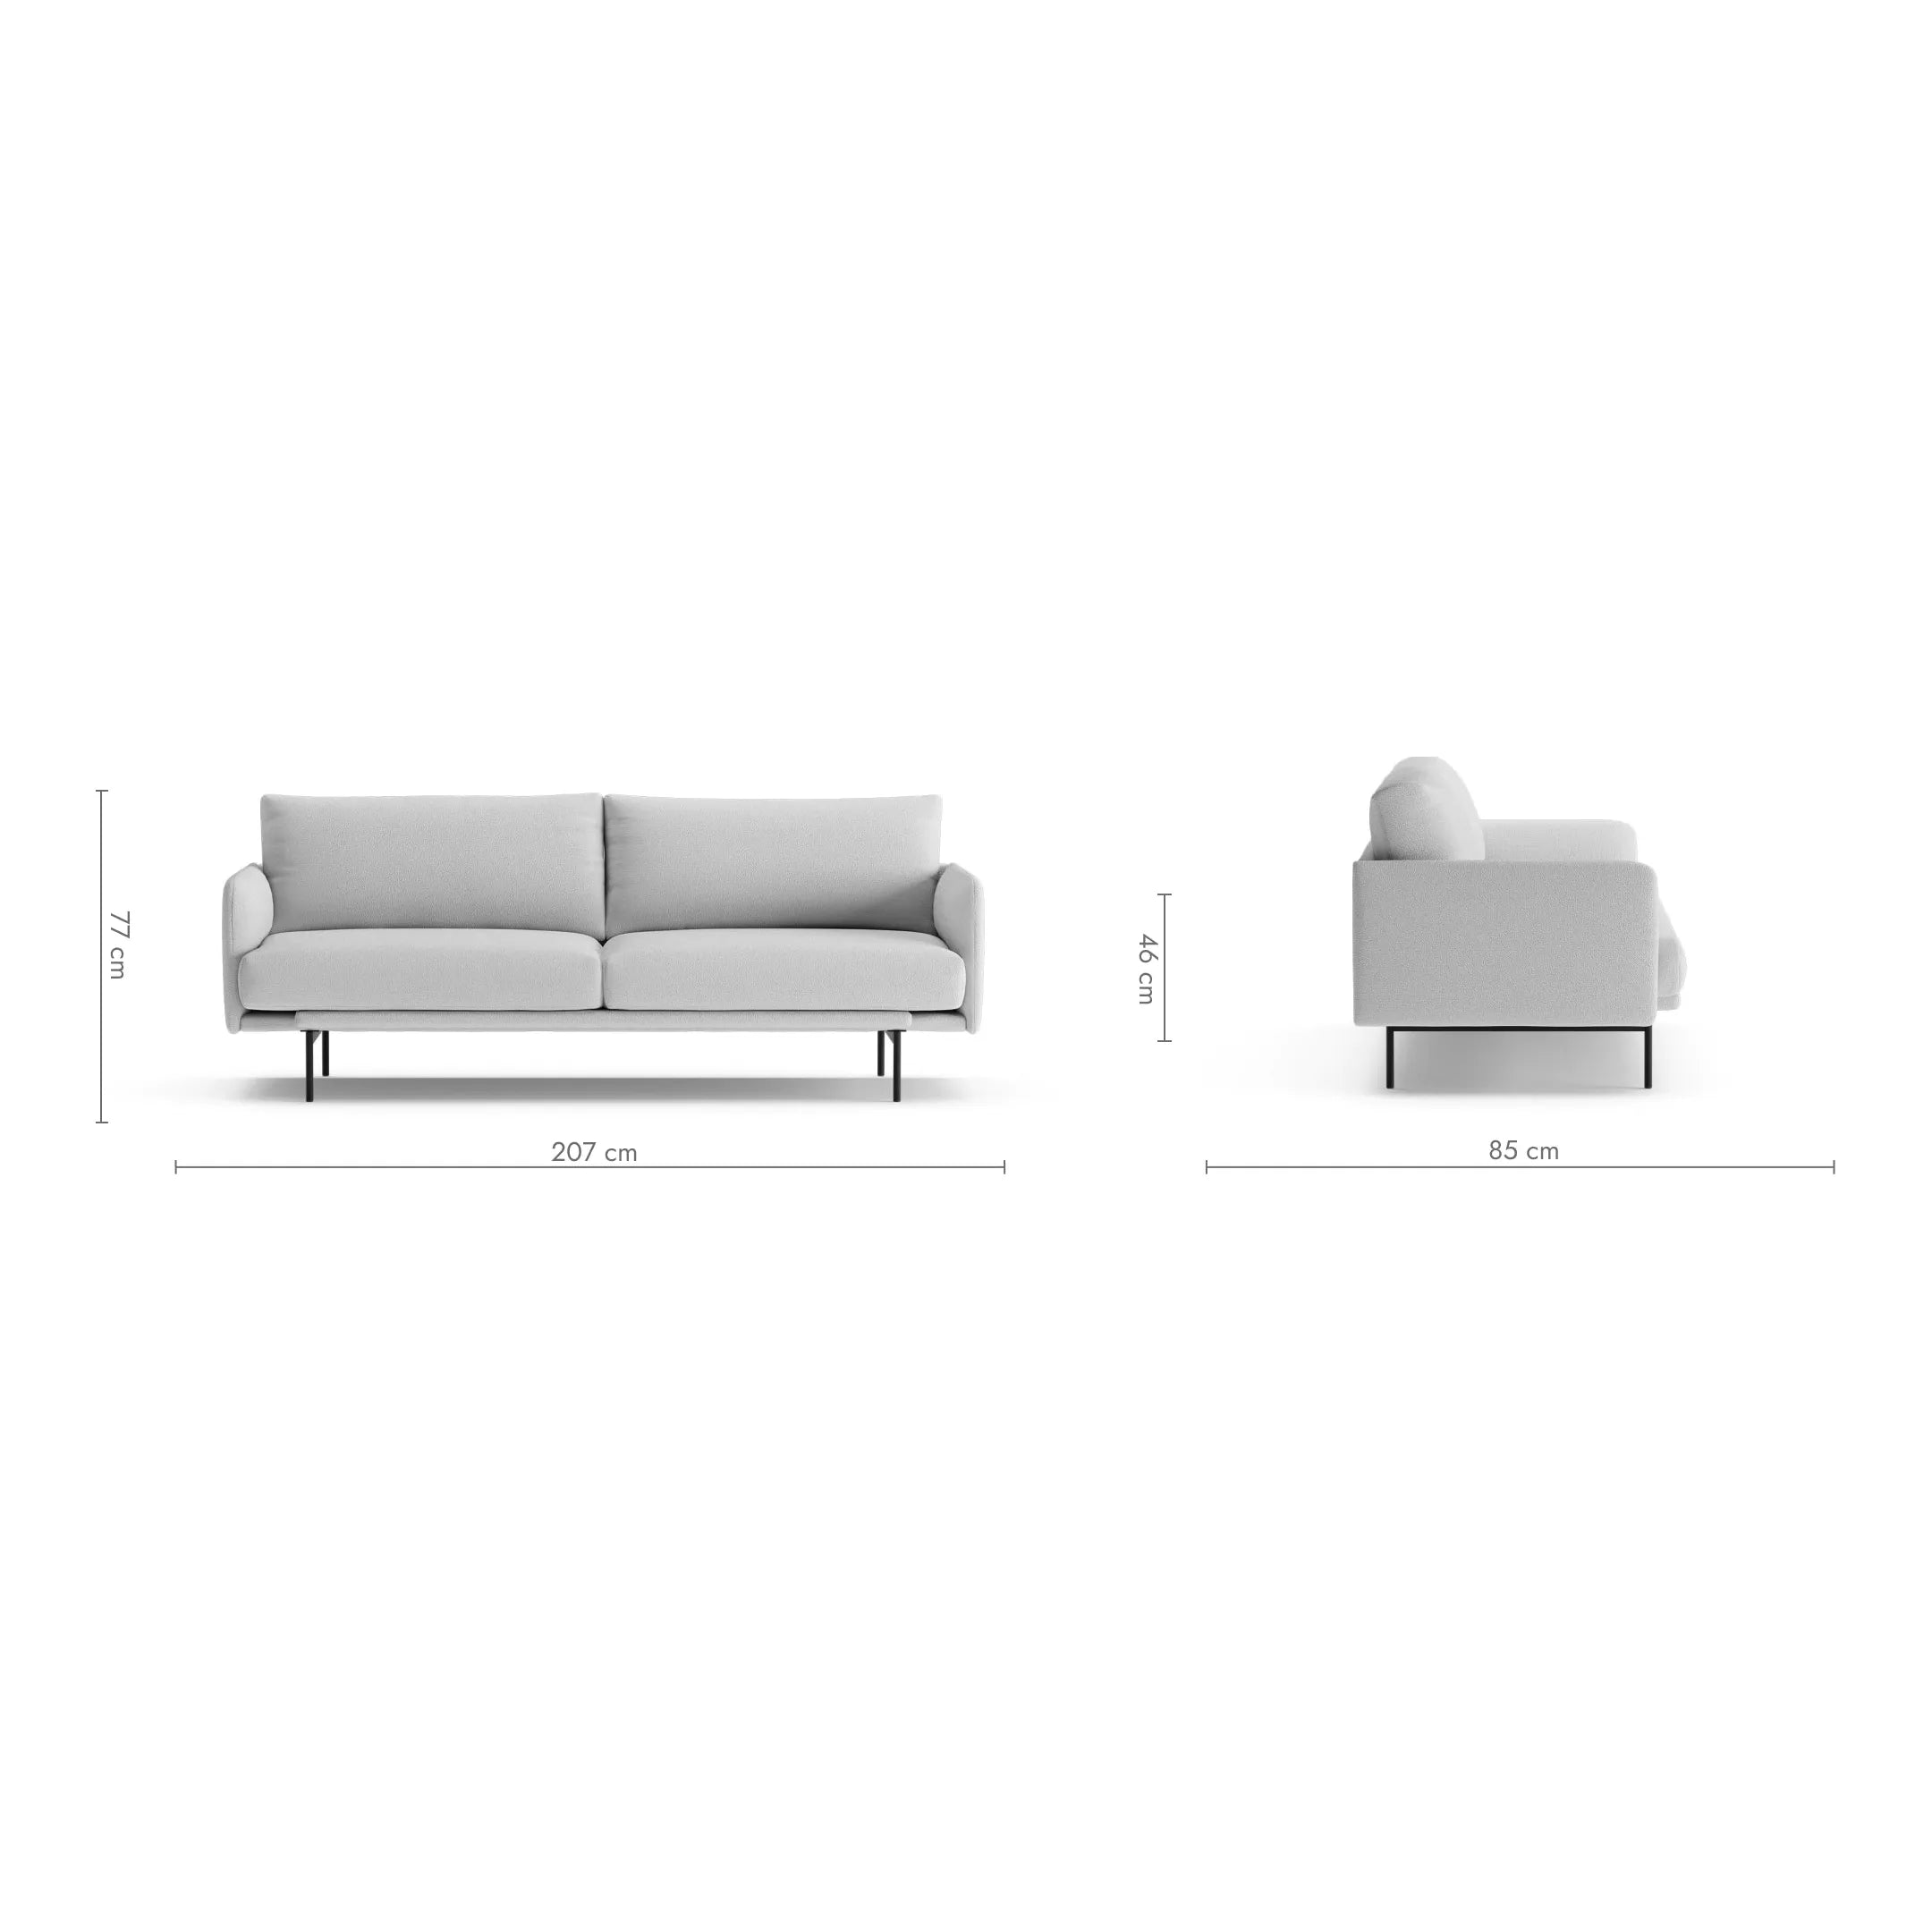 UMA 3 vietų sofa, pilka spalva